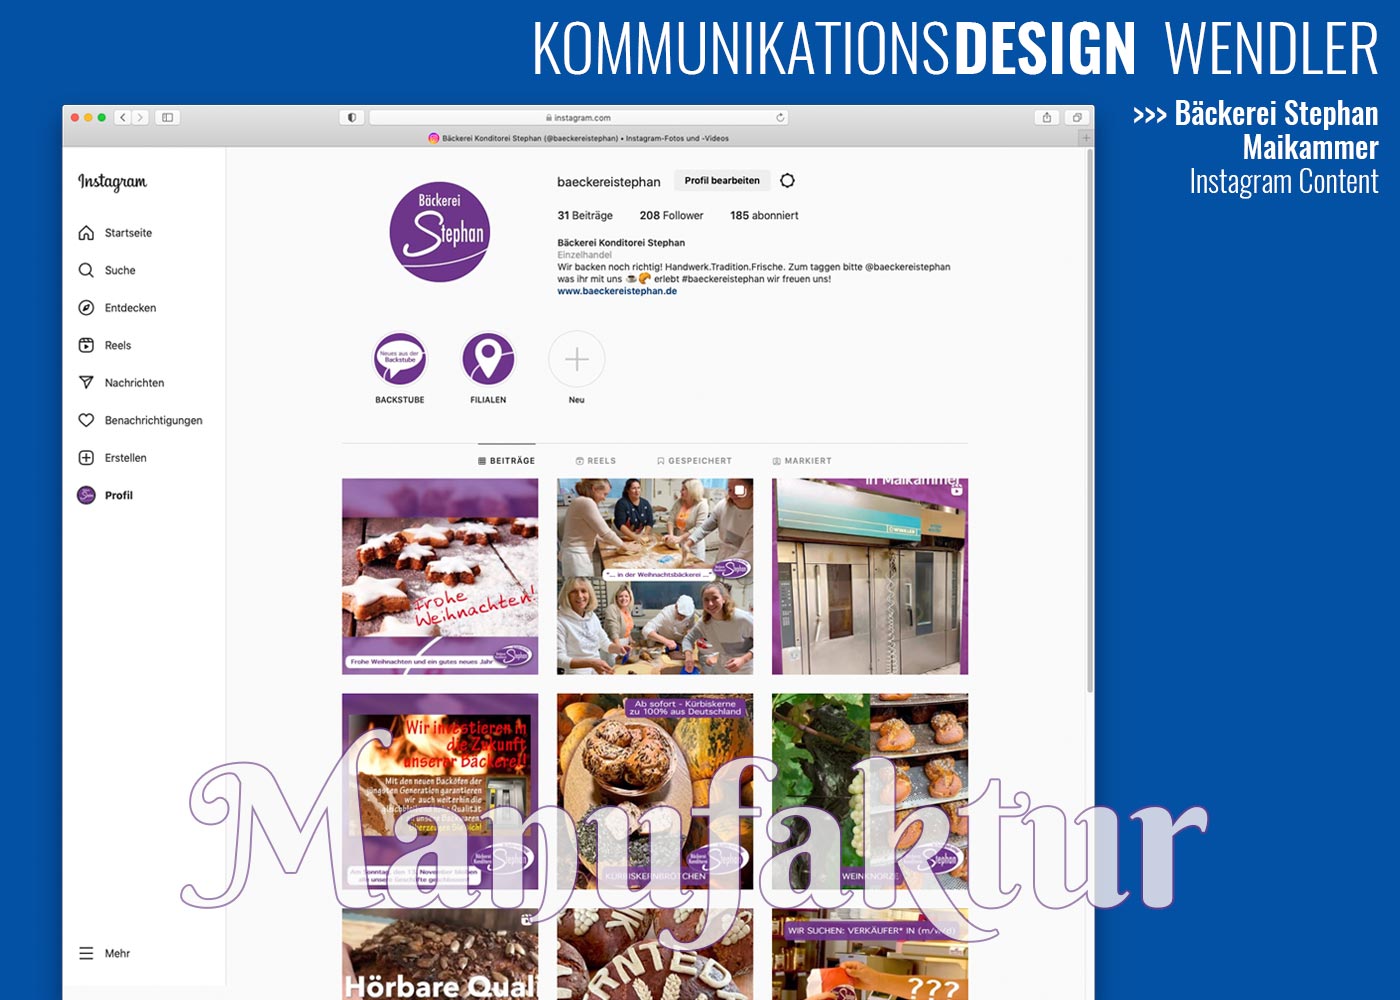 Bäckerei Stephan in Maikammer, Instagram Content Management